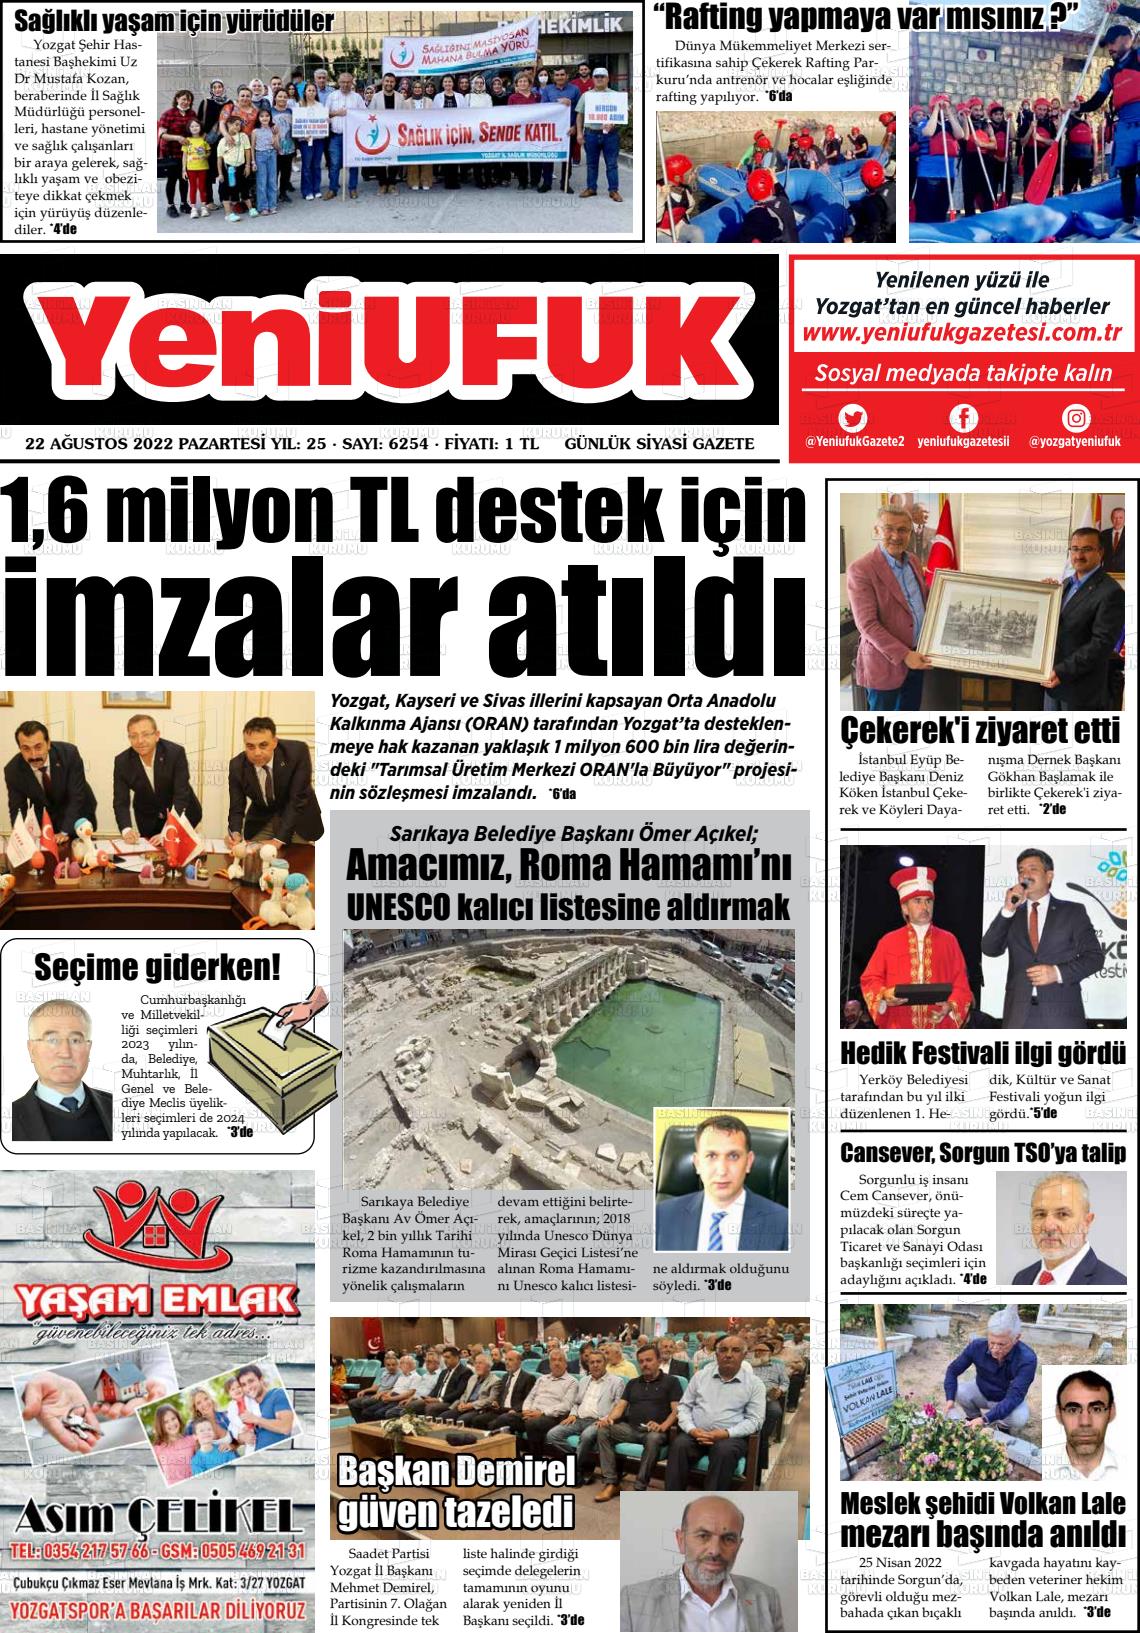 22 Ağustos 2022 Yozgat Yeni Ufuk Gazete Manşeti